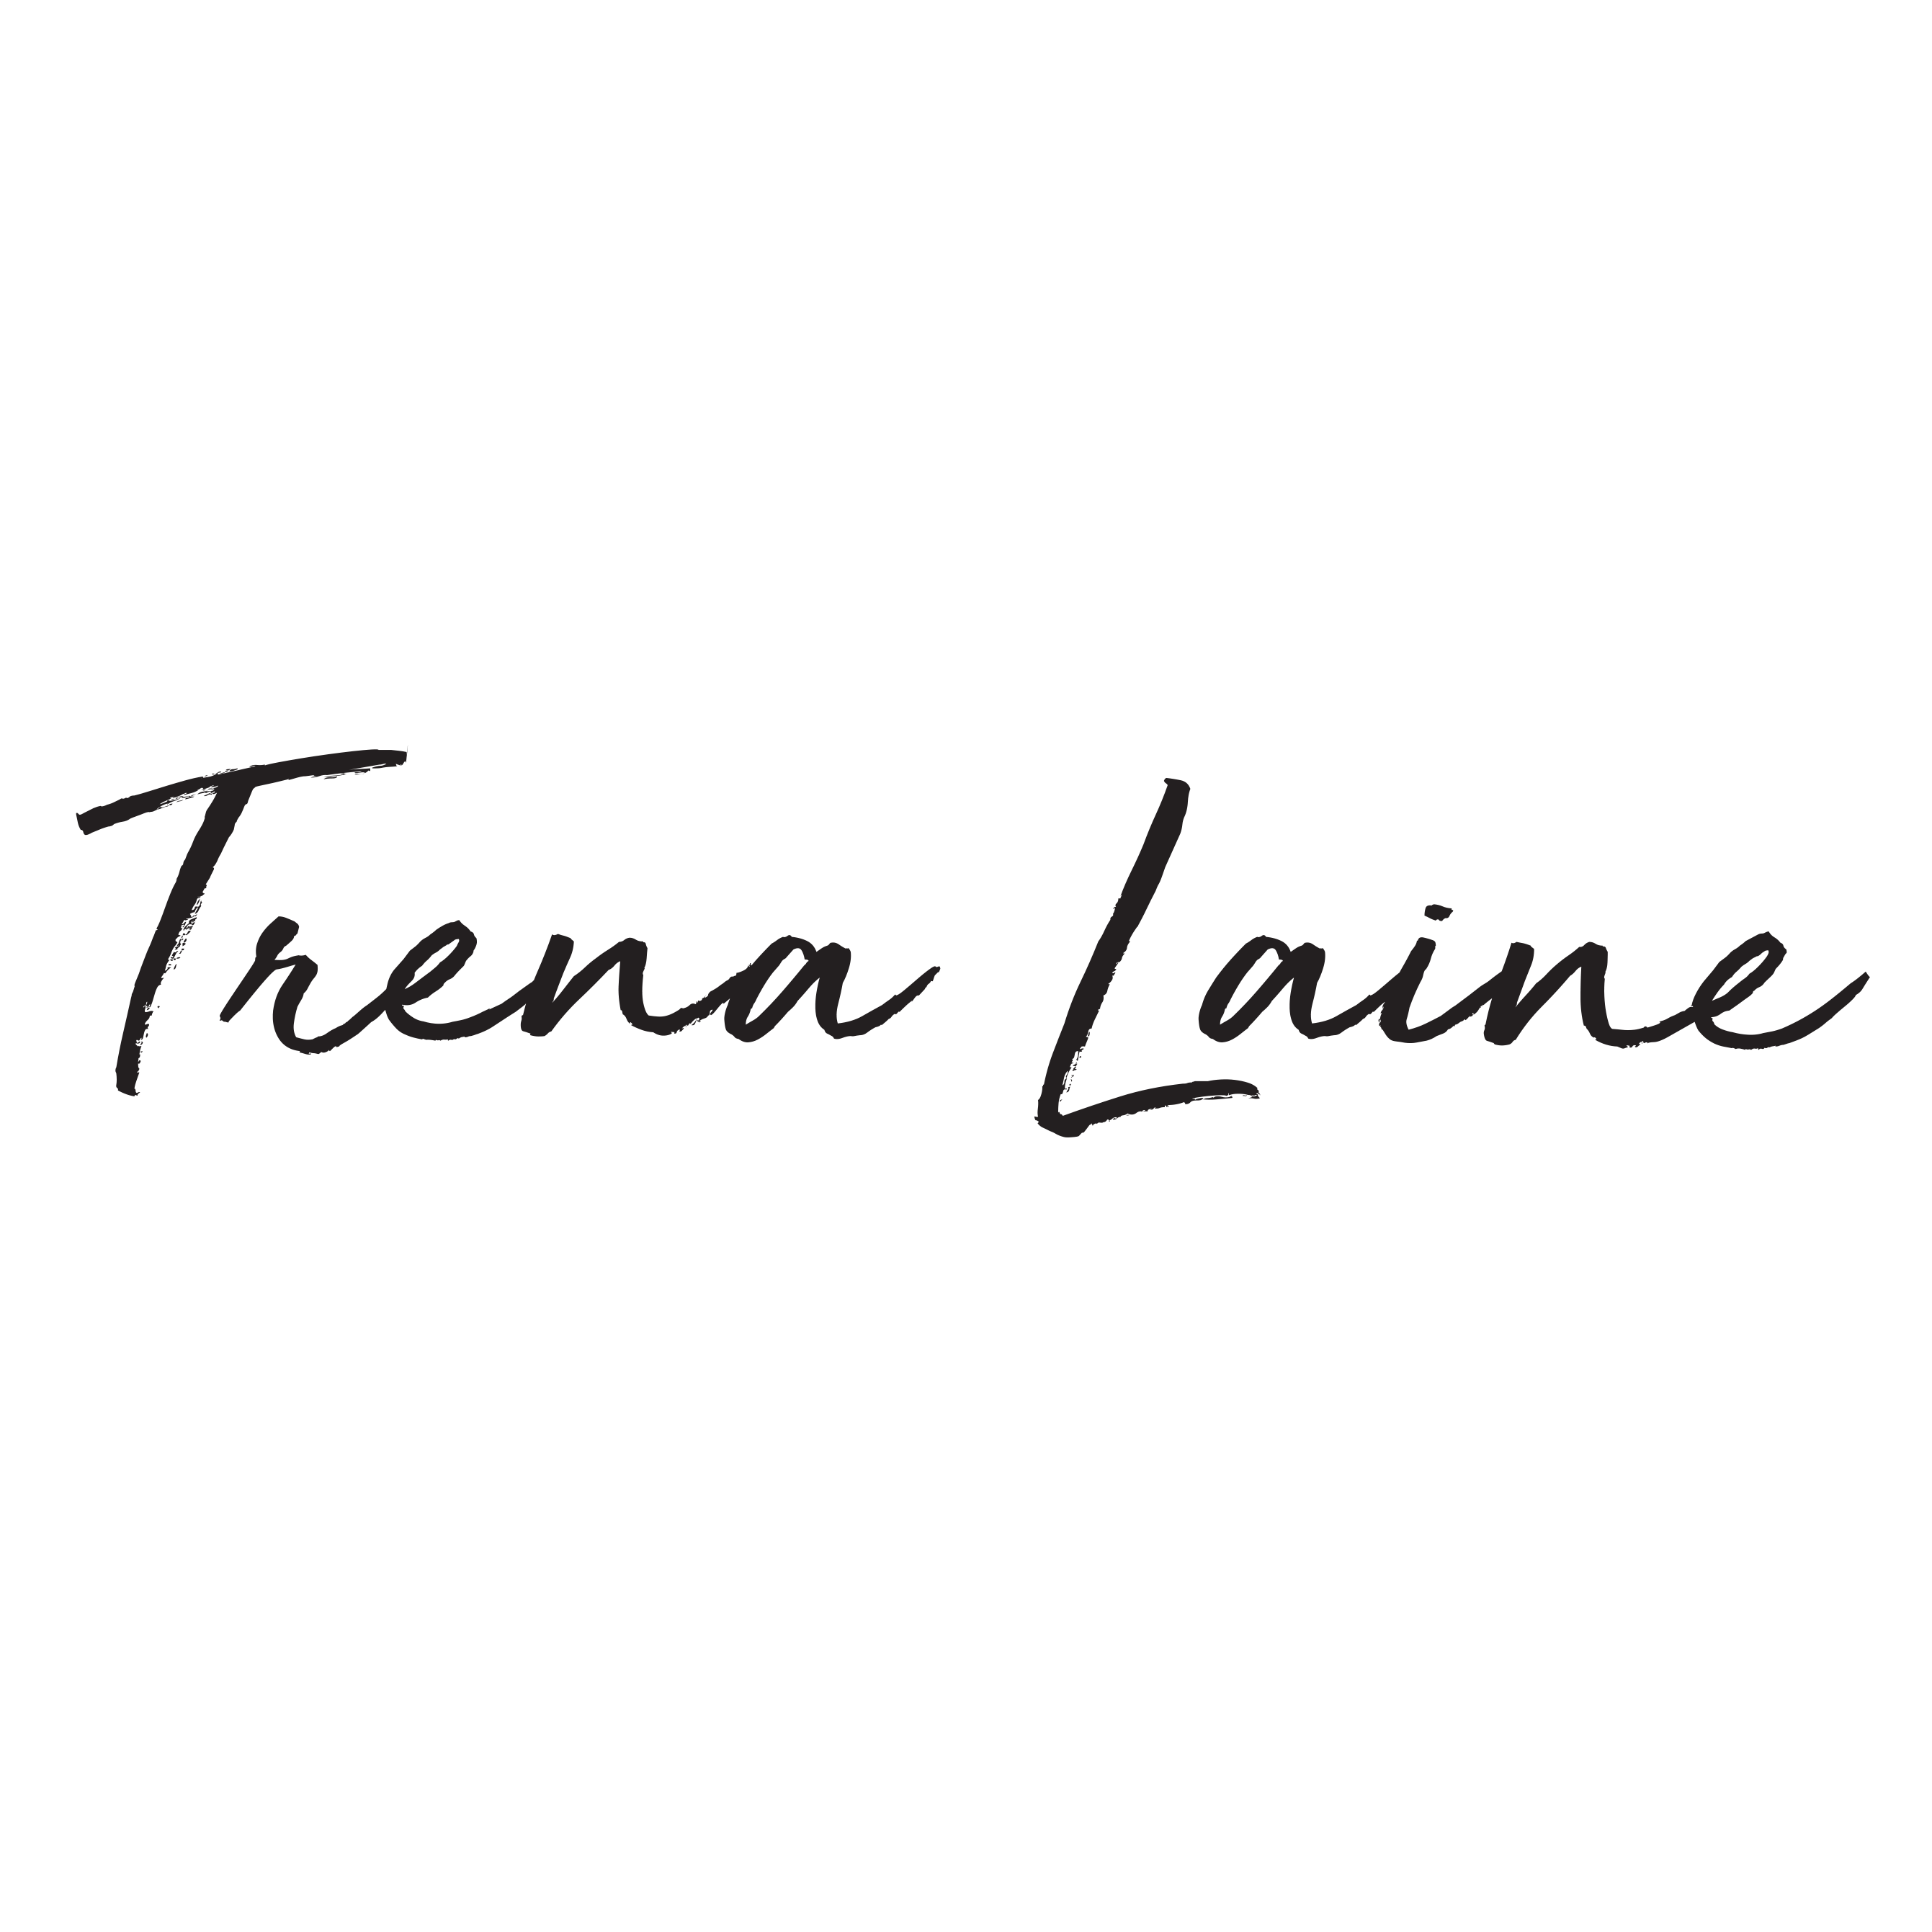 Trena Laine Makeup Company logo